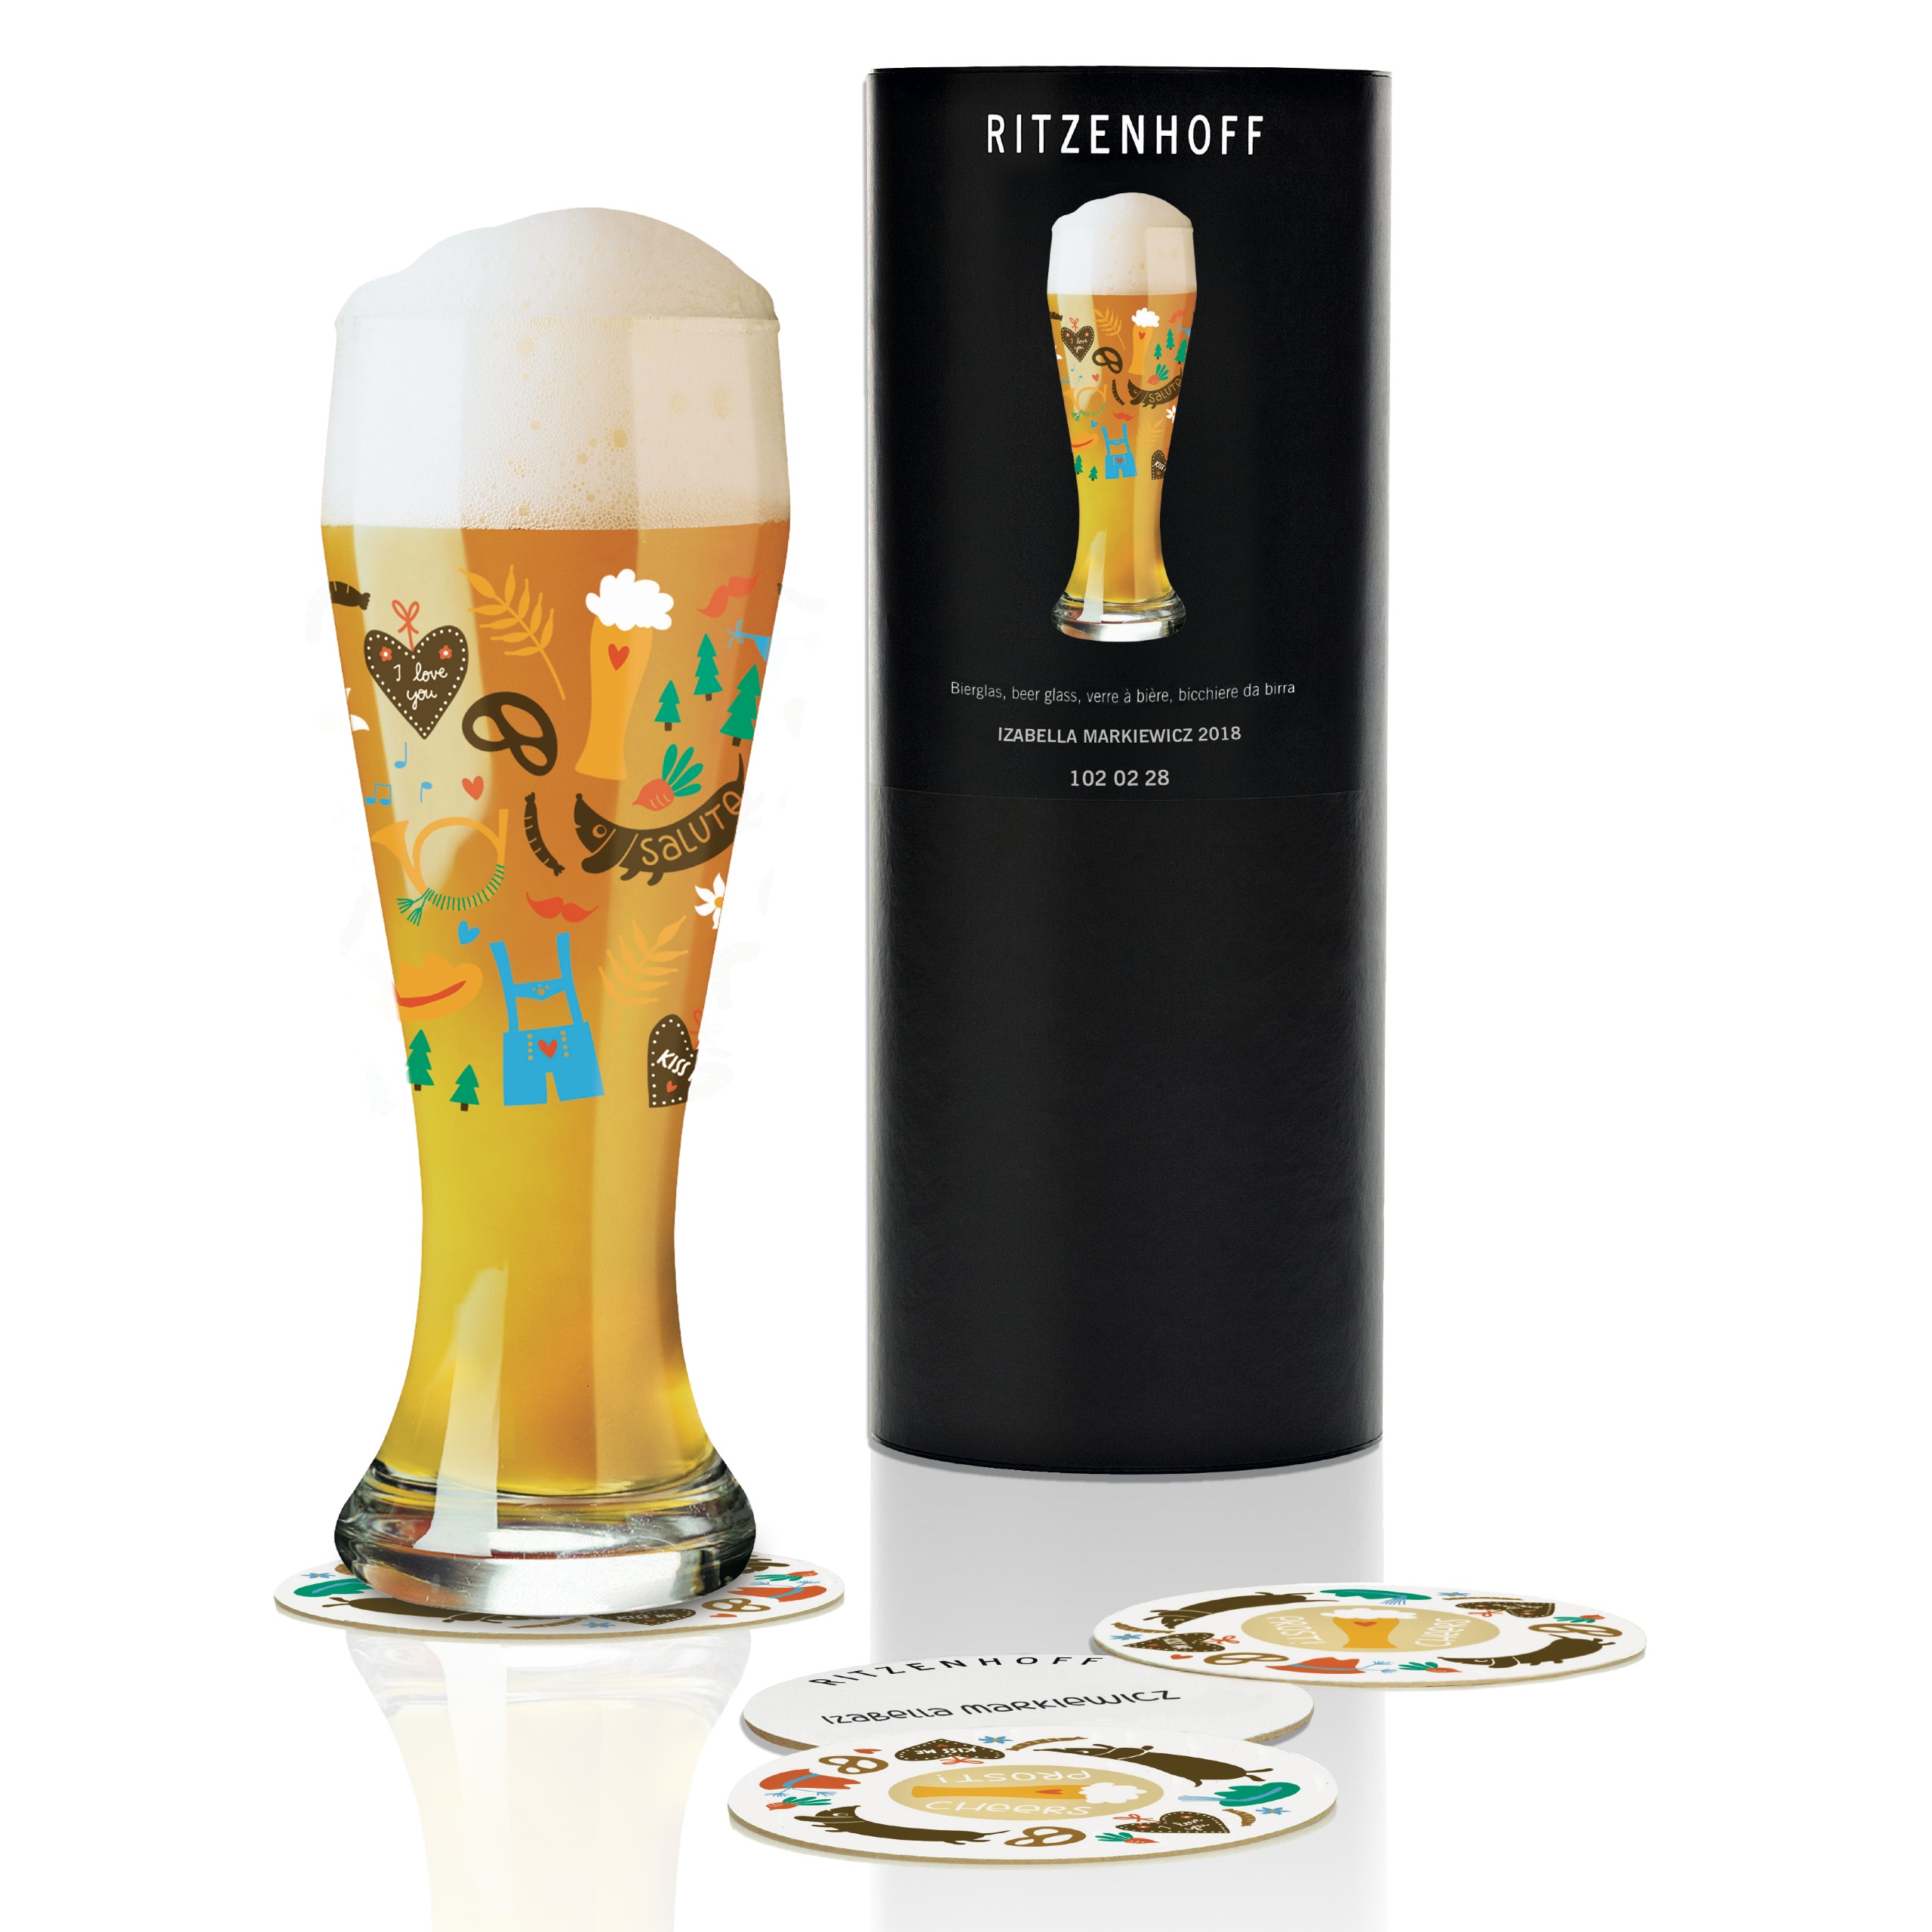 Ritzenhoff Wheat Beer beer glass by I. Markiewicz 2018 – Craft Box Direct